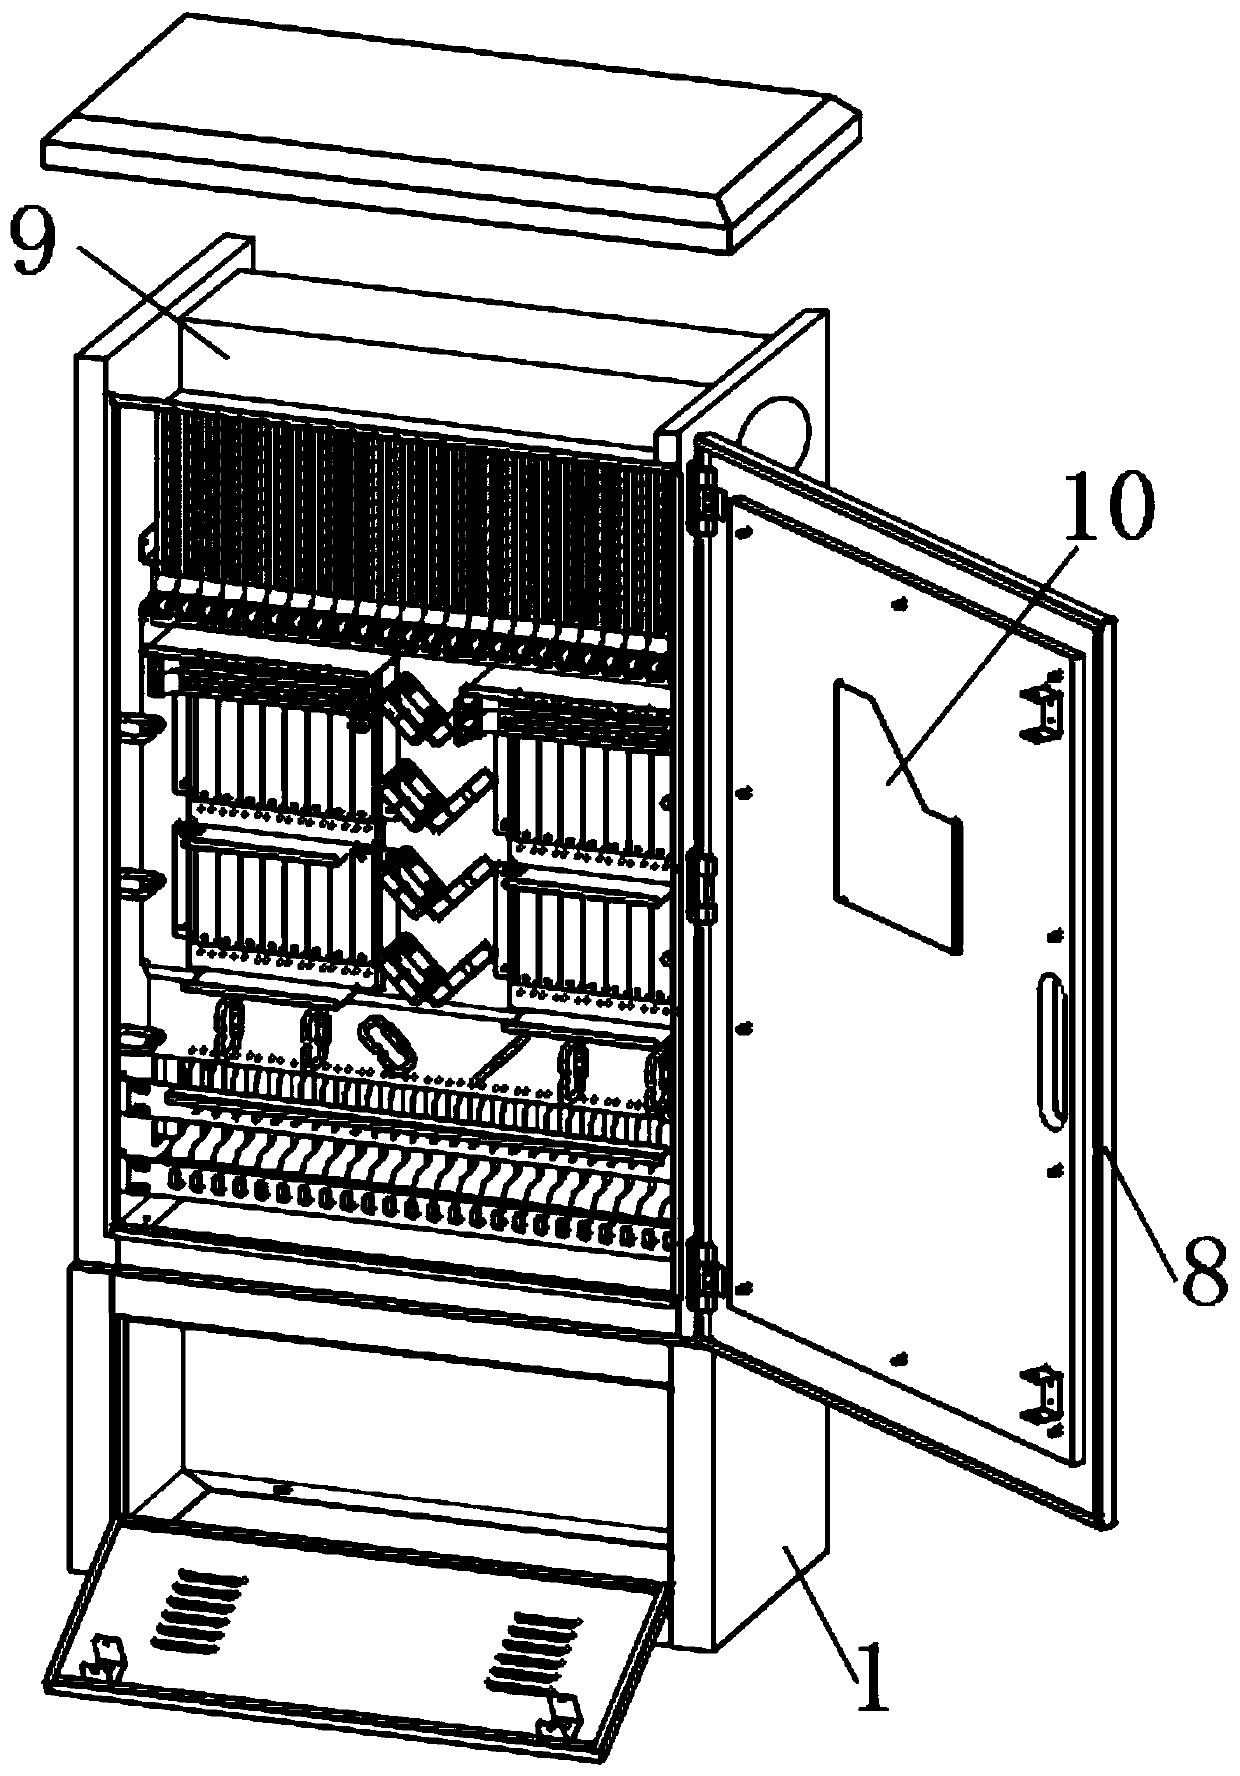 High-capacity optical cable distribution box